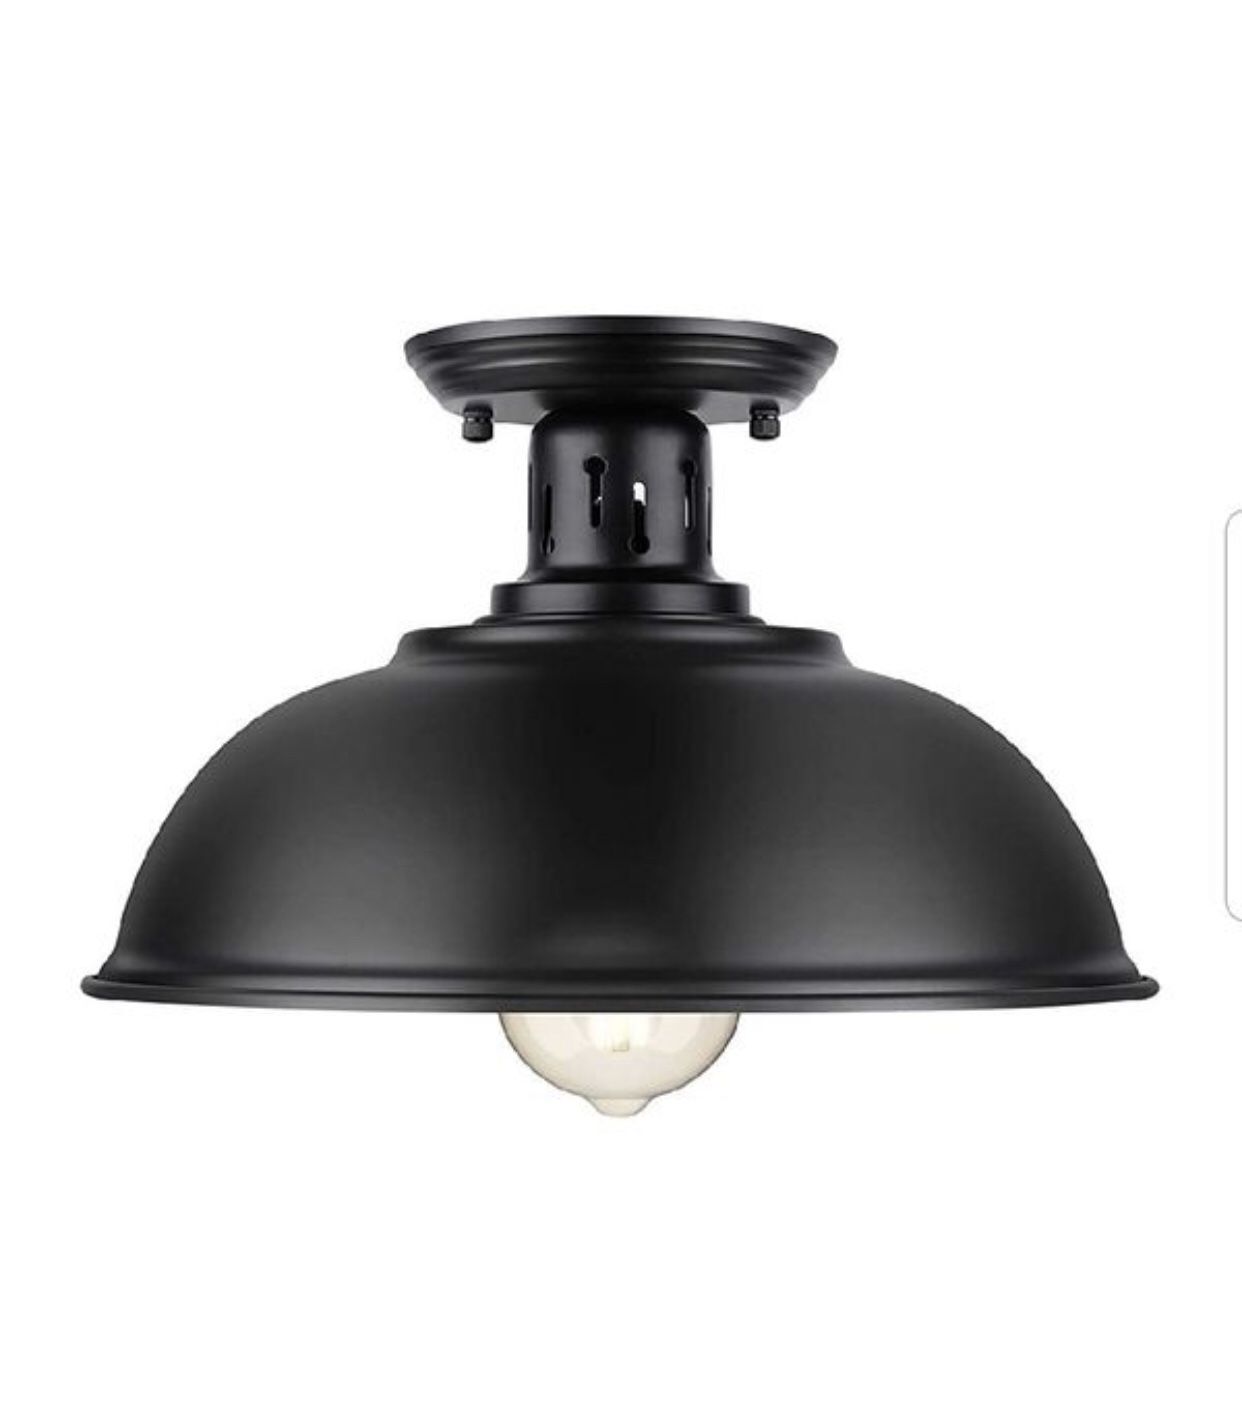 Farmhouse Semi Flush Mount Ceiling Light Fixture, E26 Medium Base, Industrial Black Pendant Lamp